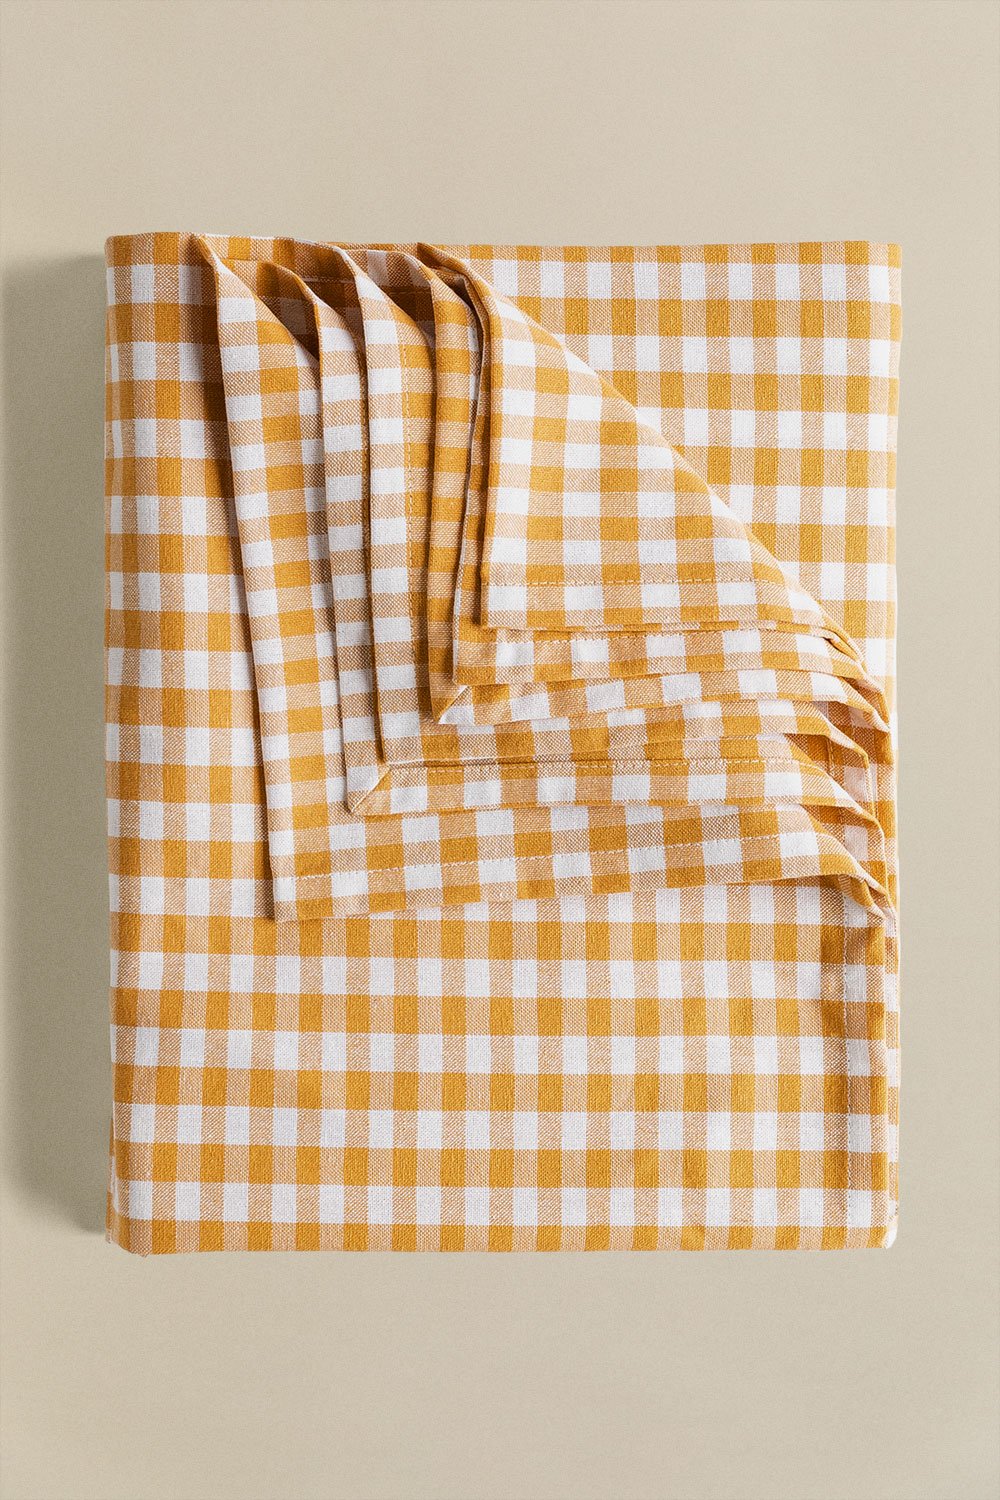 Cotton tablecloth (240x140cm) Elixe, gallery image 2